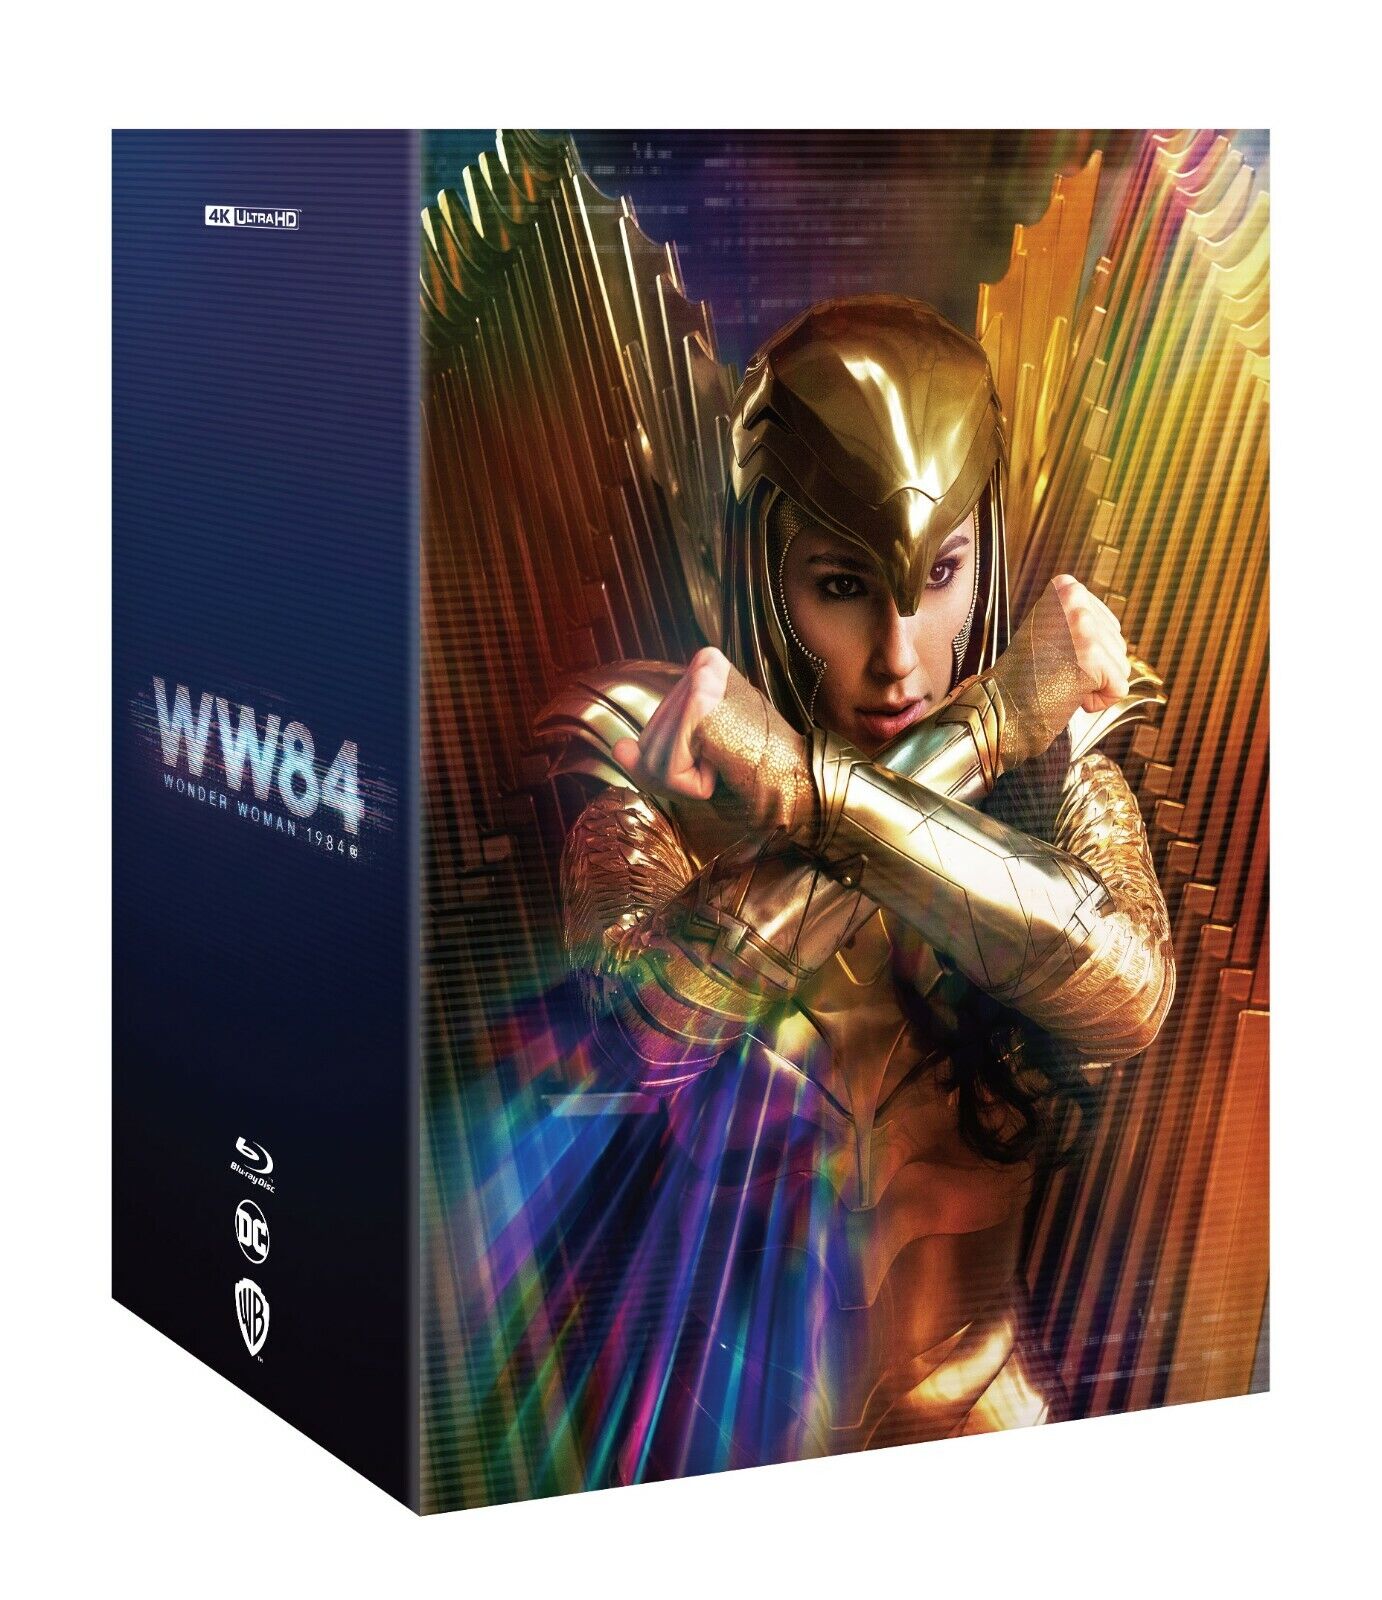 Wonder Woman 1984 4K Blu-ray Steelbook Manta Lab Exclusive ME#38 One Click Box Set